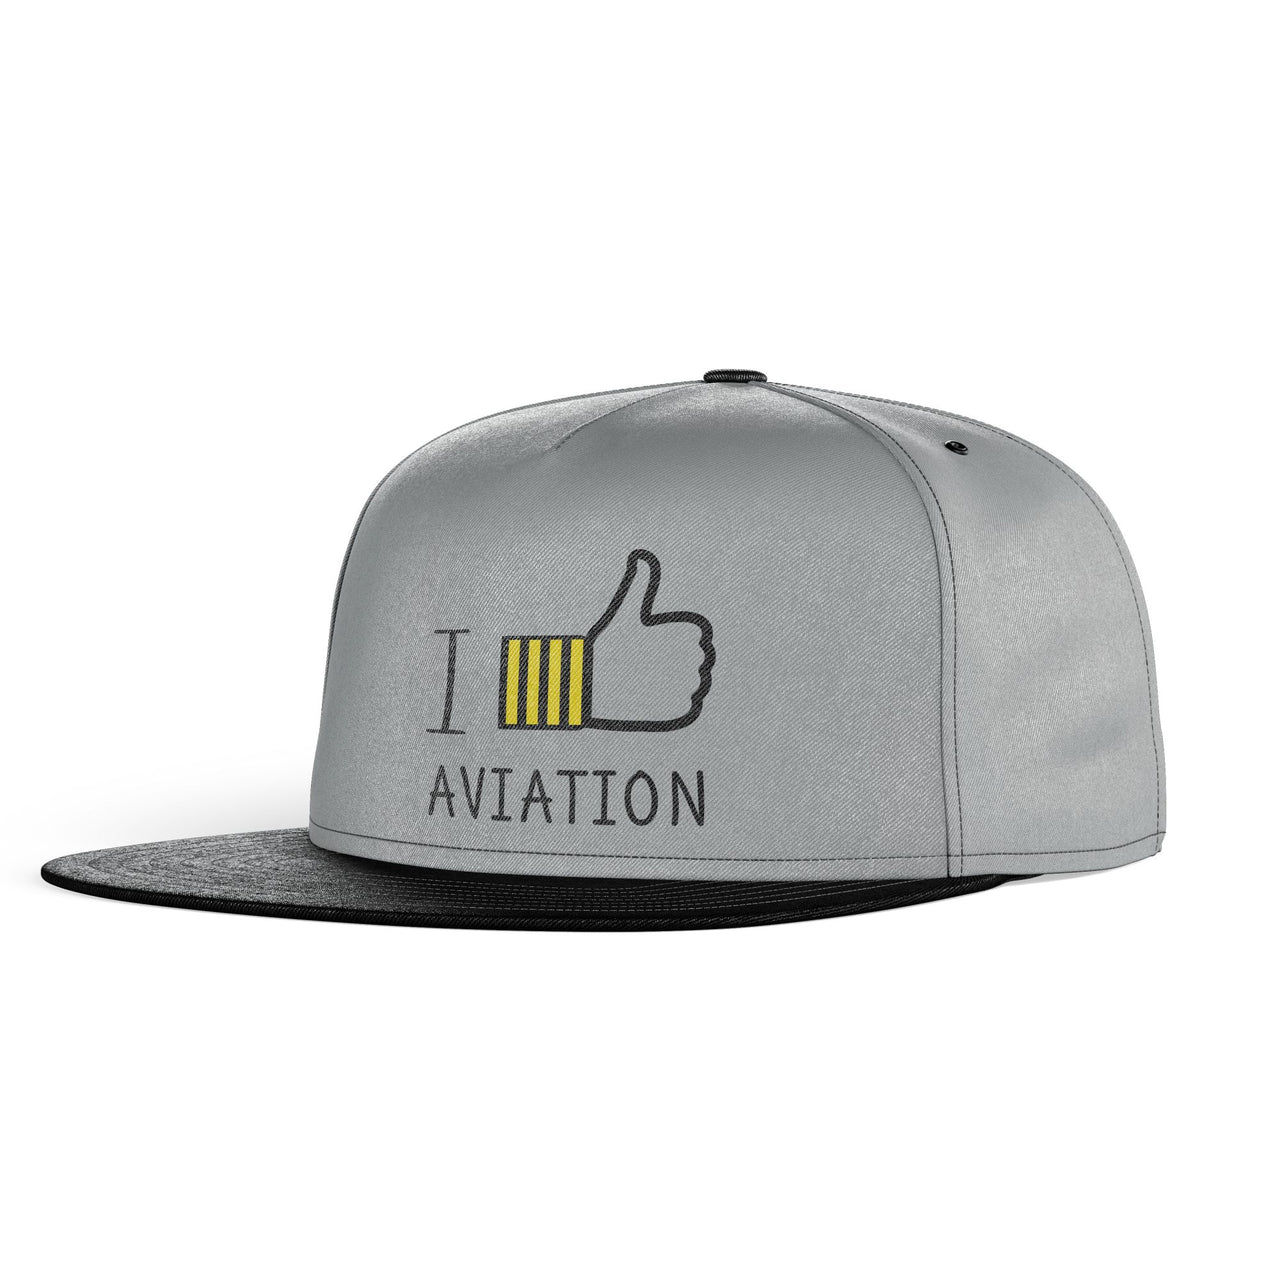 I Like Aviation Designed Snapback Caps & Hats